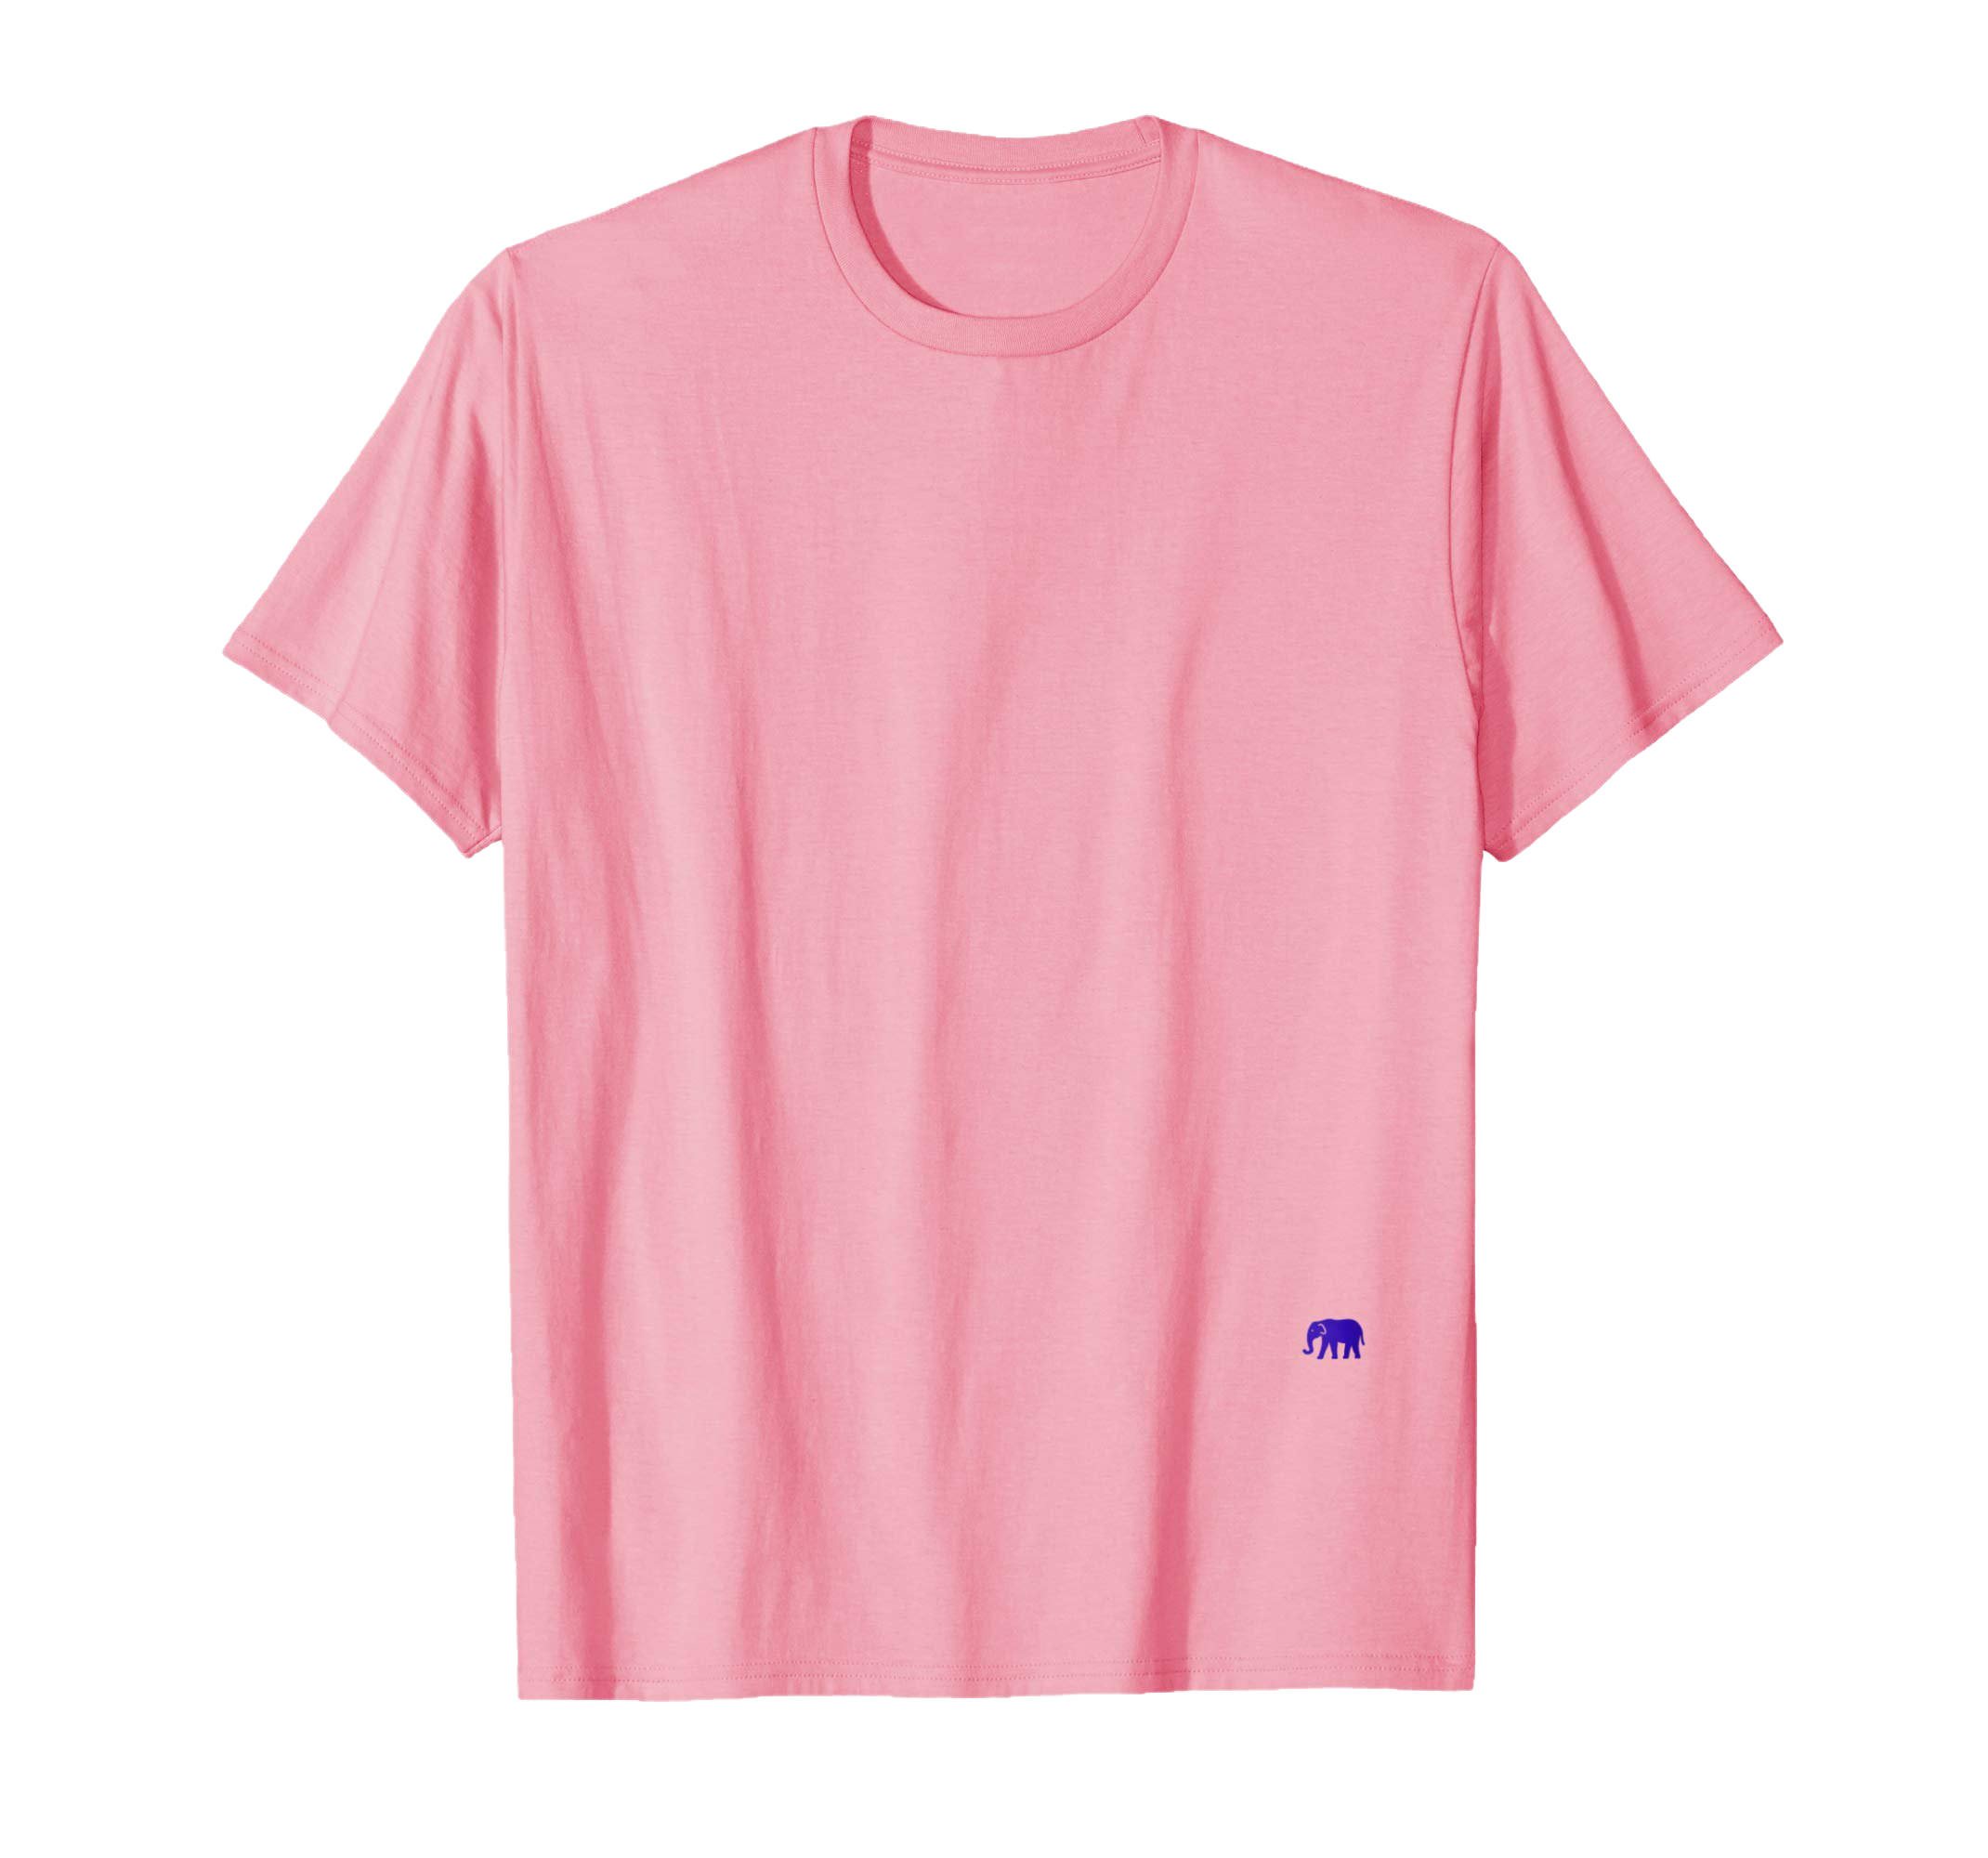 Plain Pink T-Shirt PNG Photo